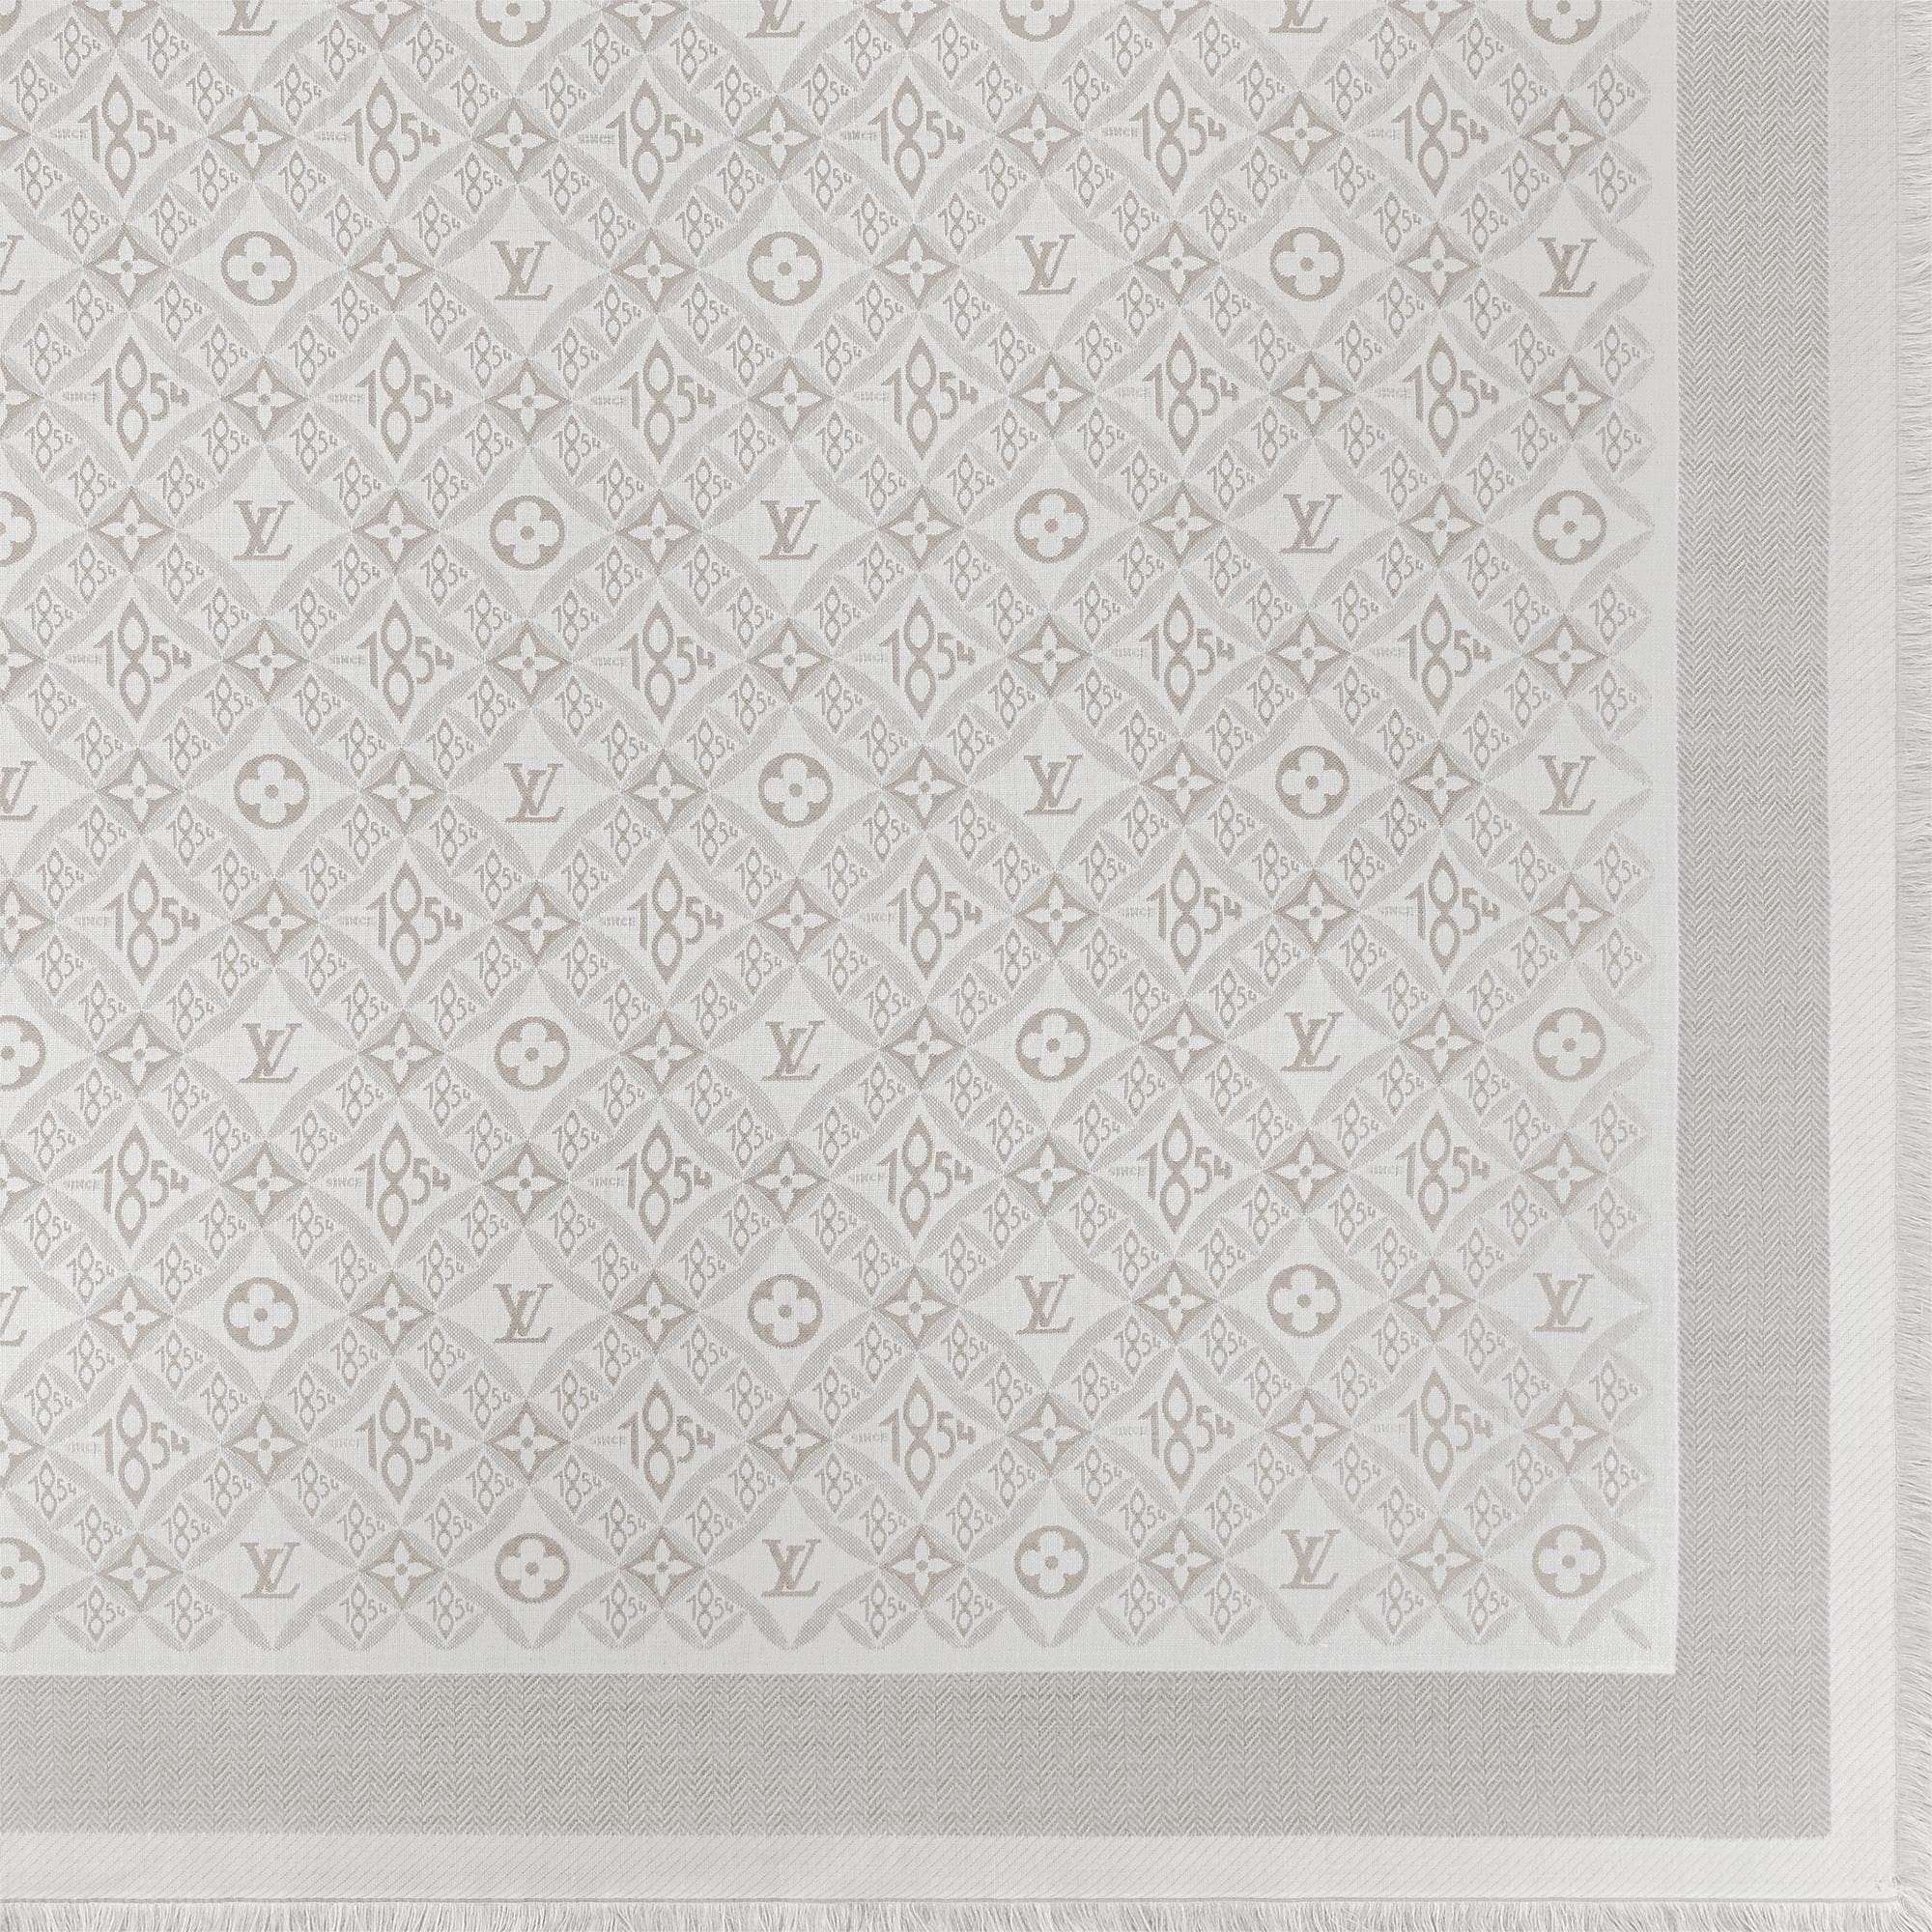 Louis Vuitton - Since 1854 Monogram Shawl - Gray – Shop It